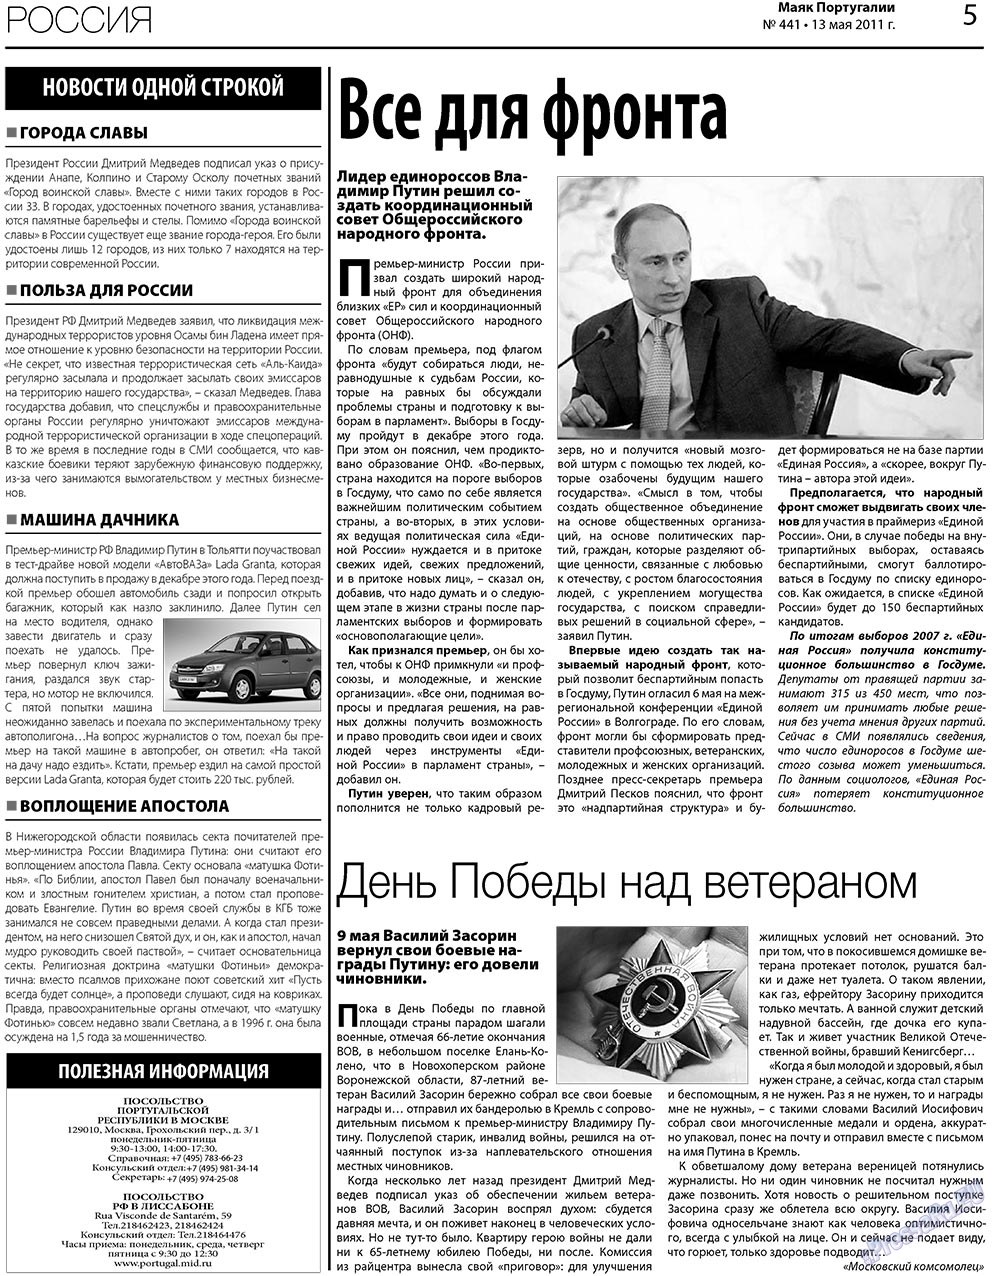 Маяк Португалии, газета. 2011 №441 стр.5